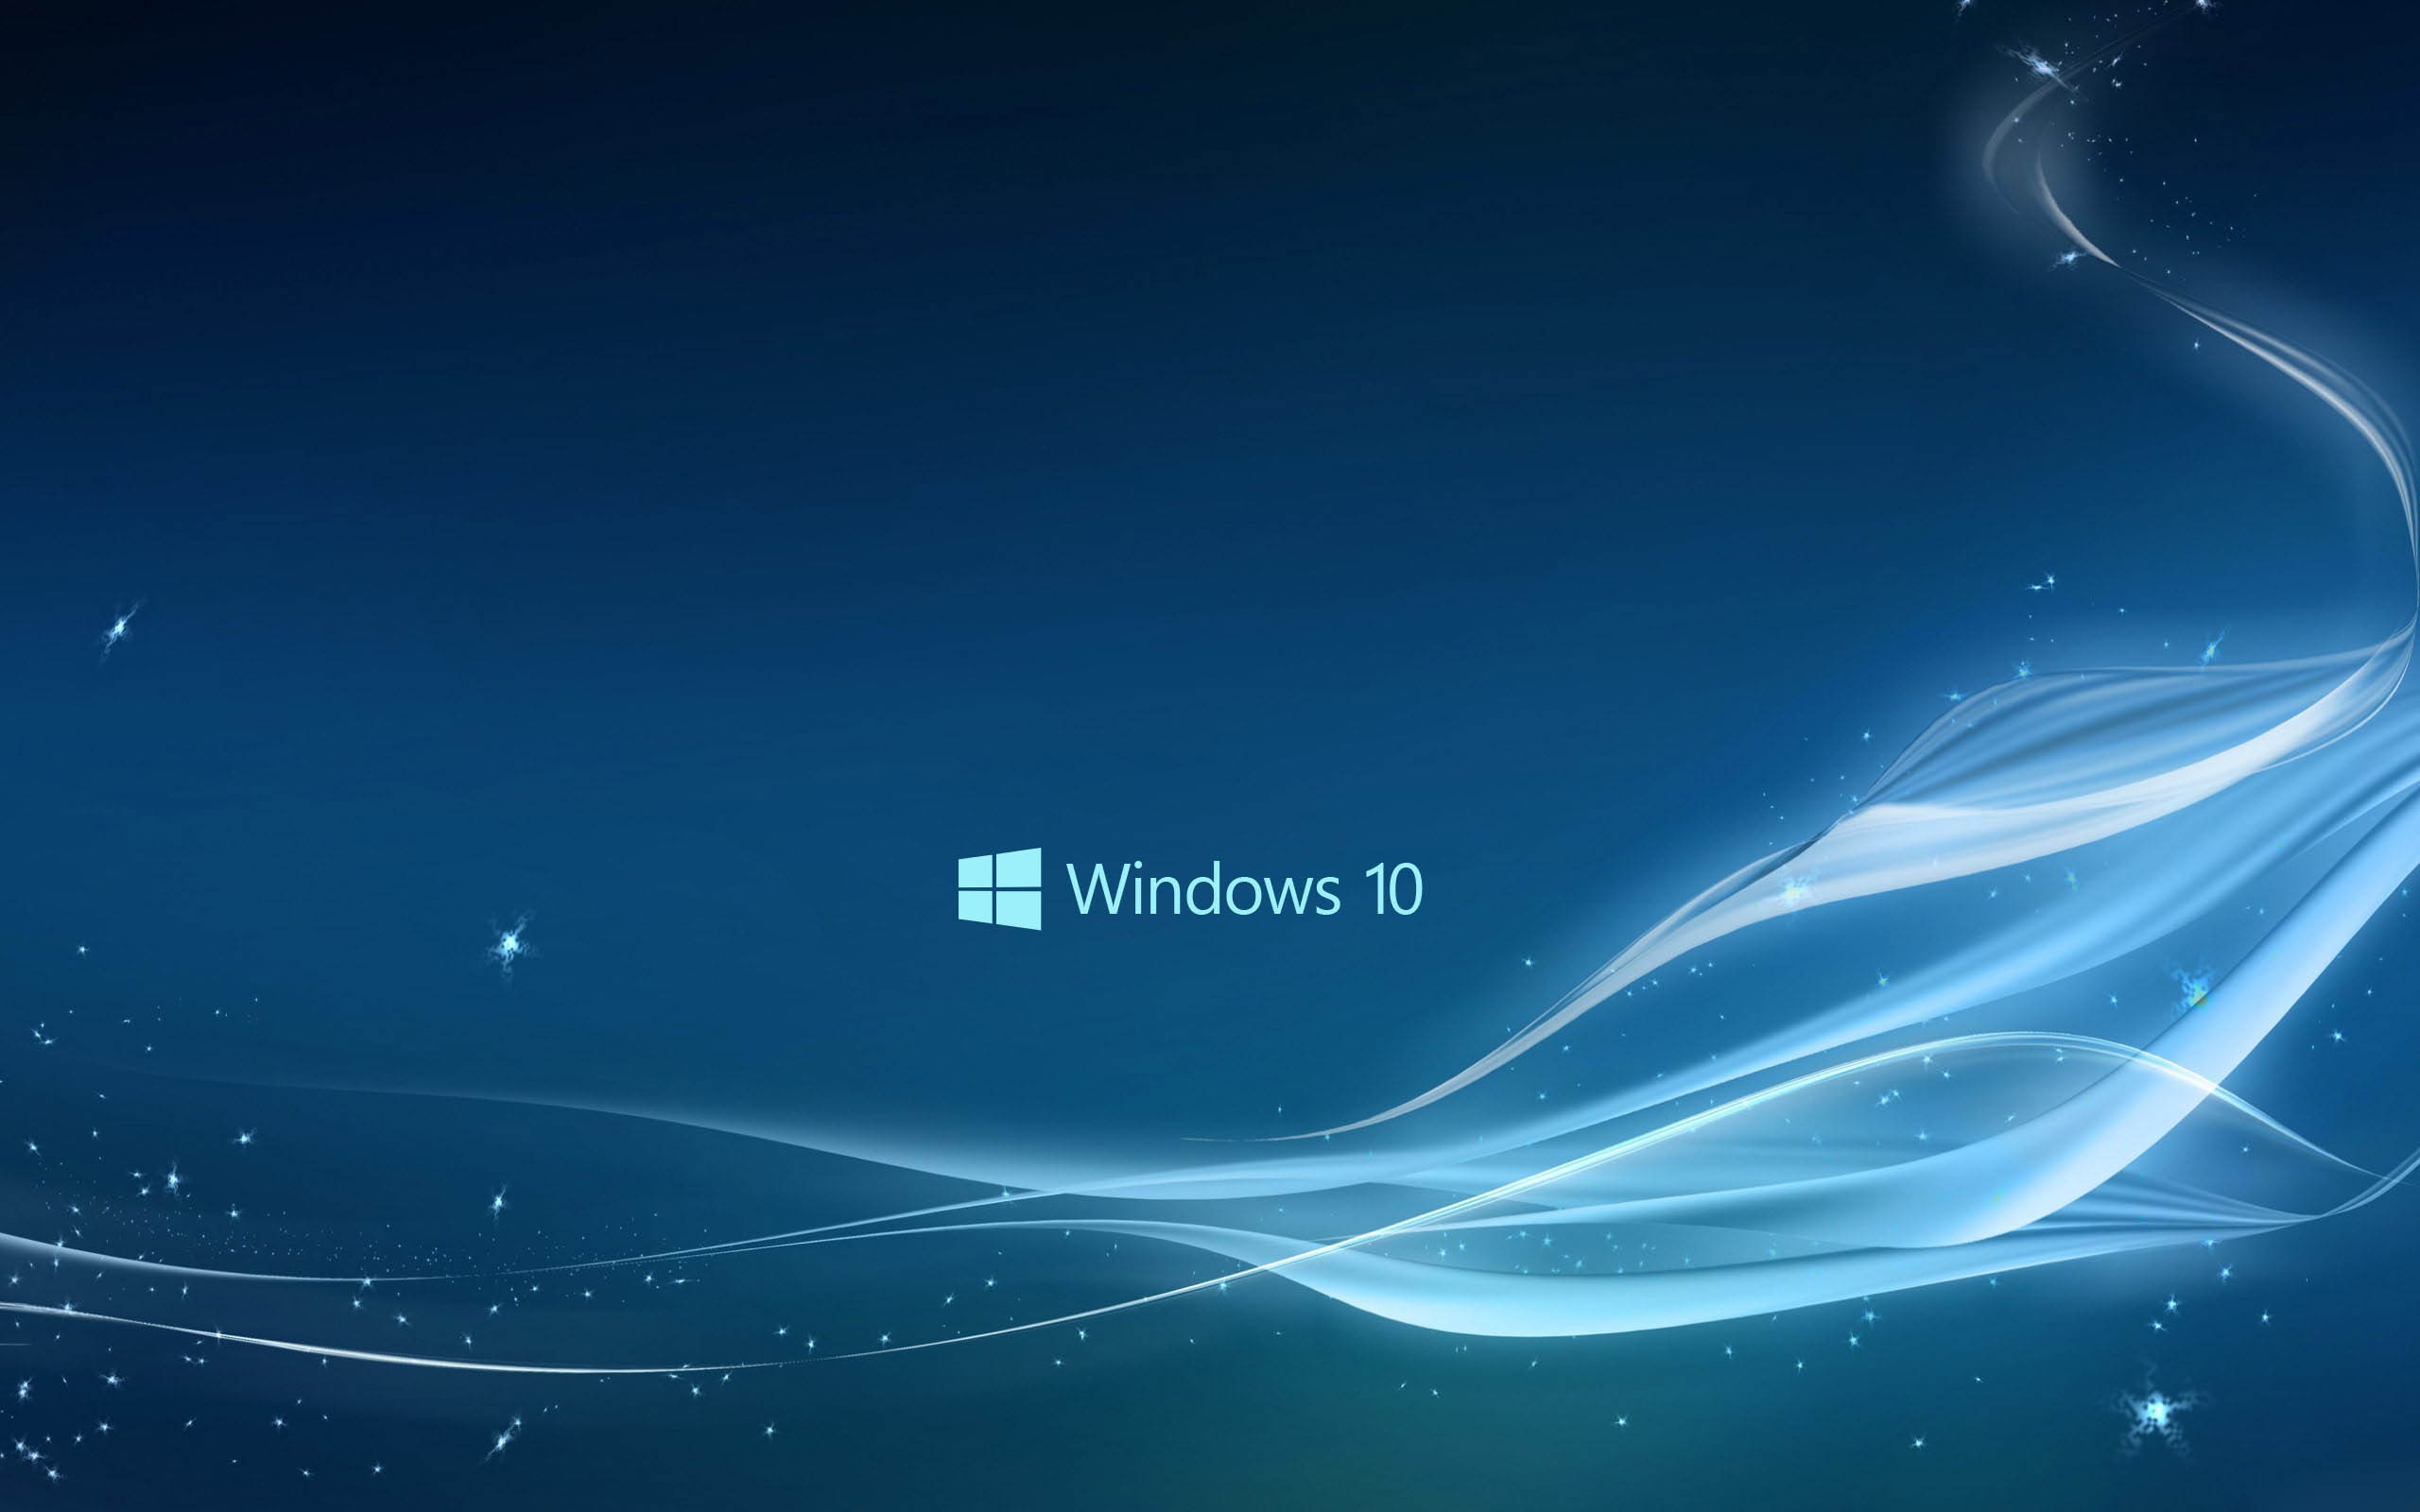 Windows 10 wallpaper HD 1080p ·① Download free beautiful ...